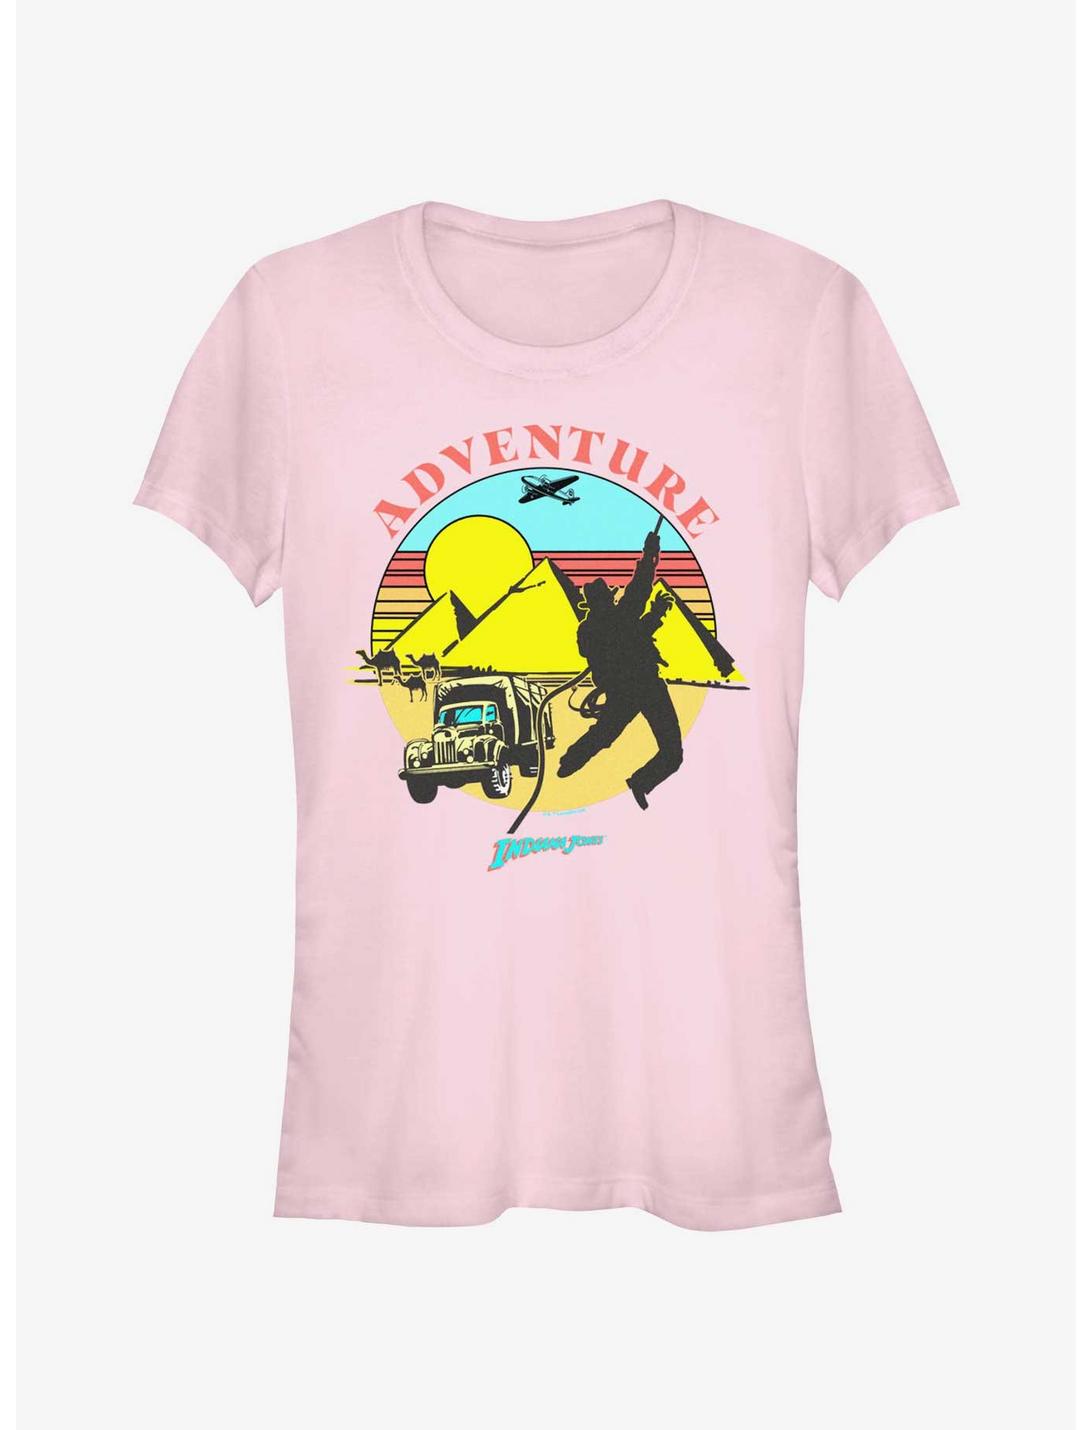 Indiana Jones The Desert Chase Adventure Girls T-Shirt Hot Topic Web Exclusive, LIGHT PINK, hi-res